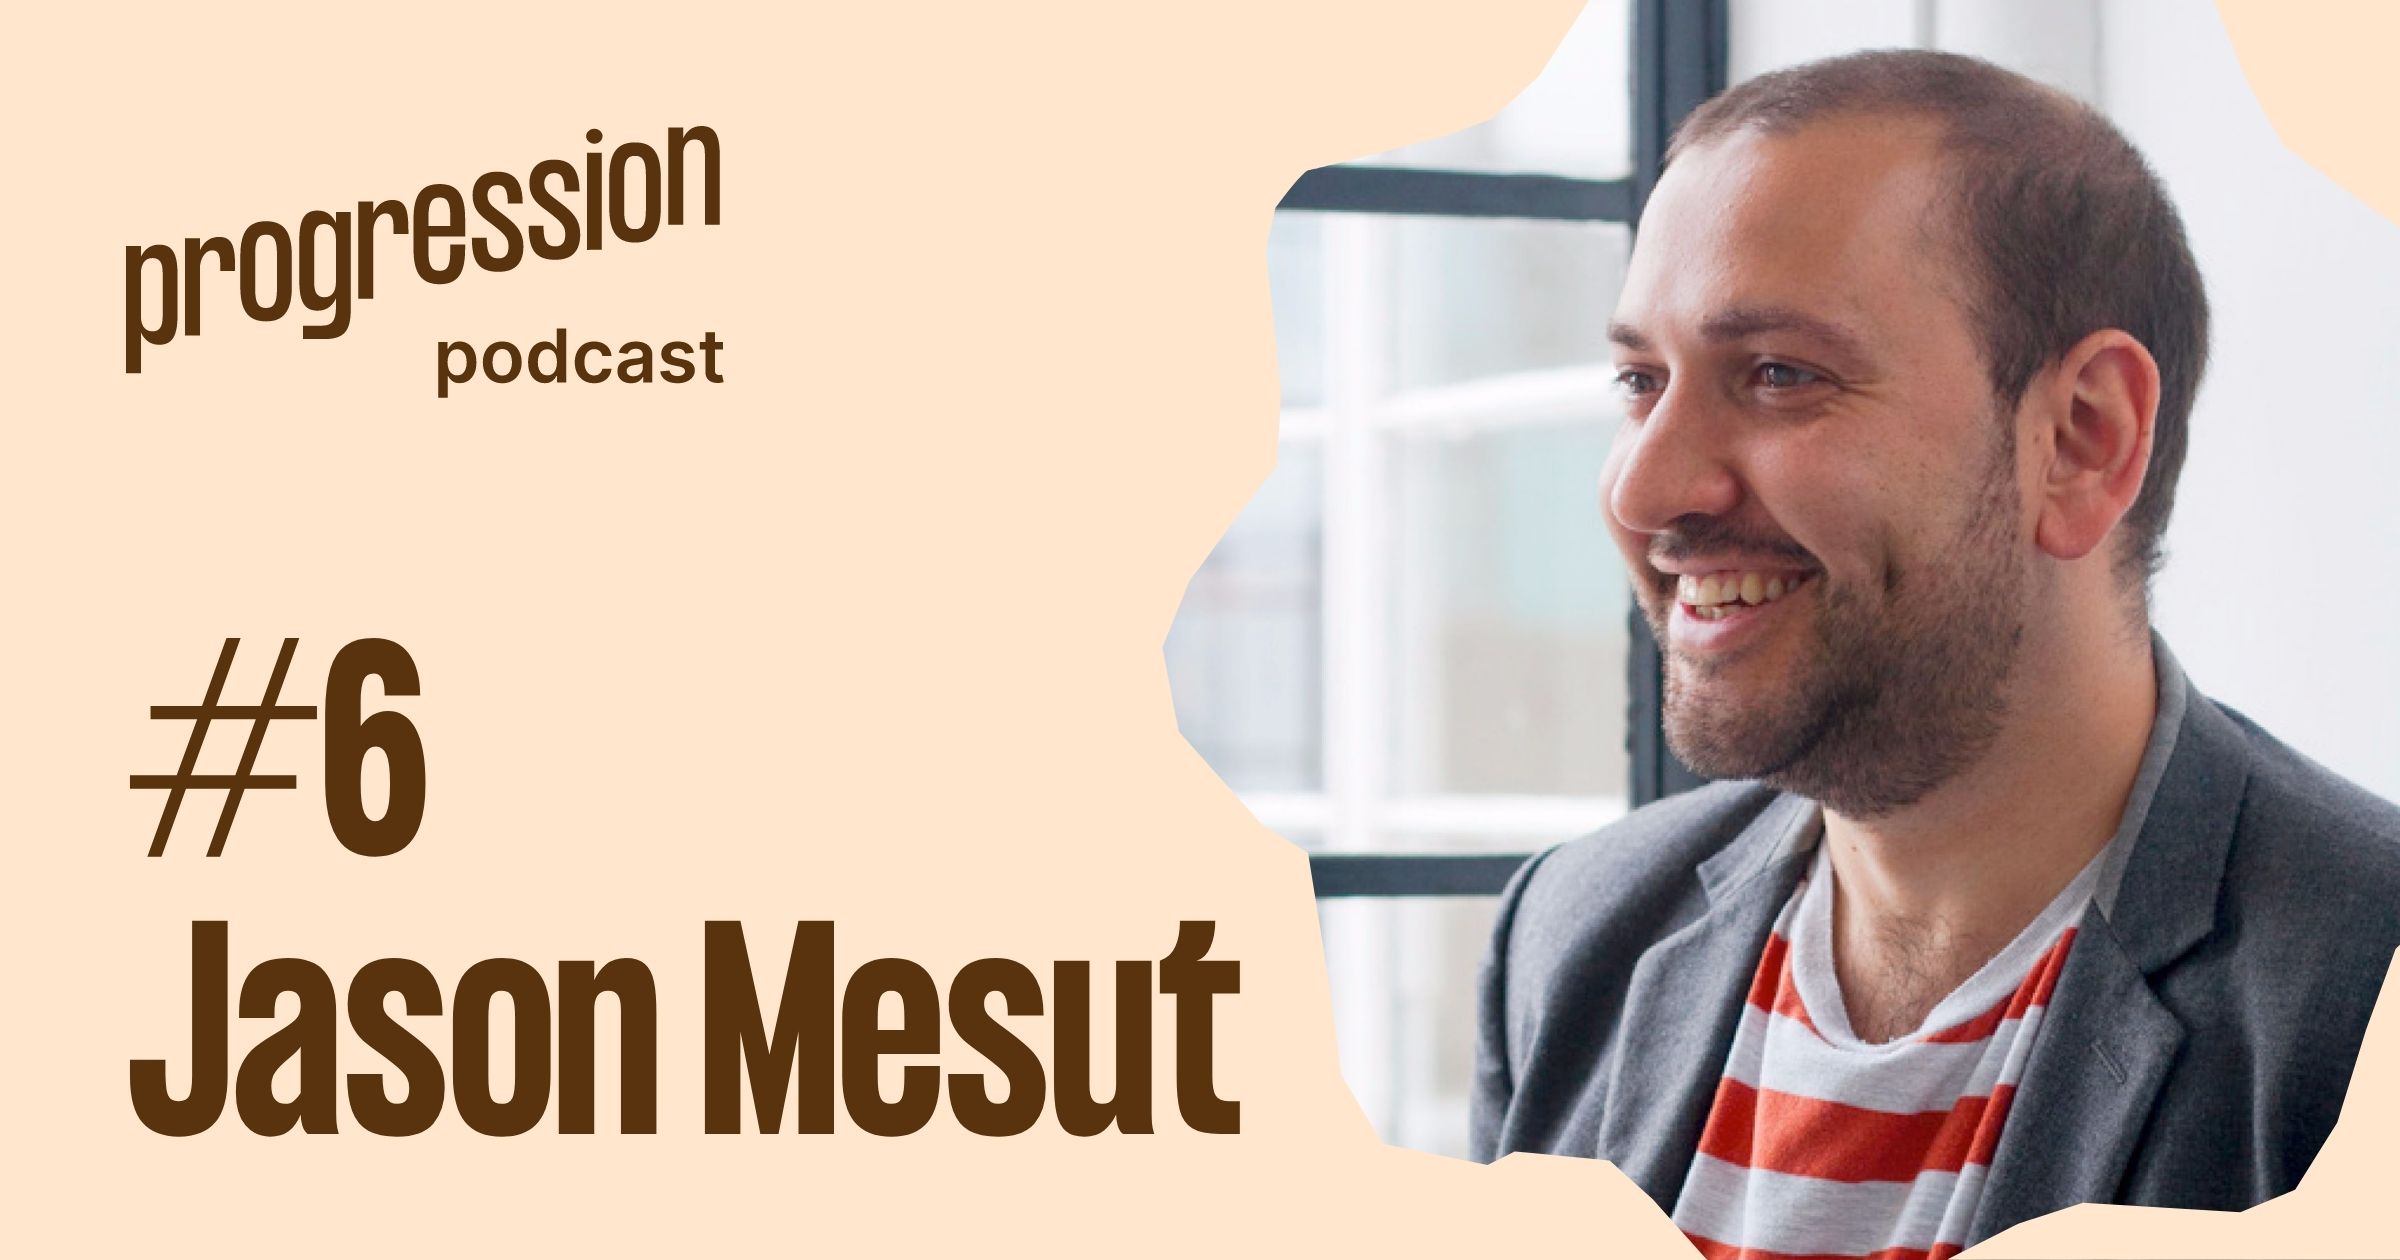 Podcast #6: Jason Mesut on Online Mistakes and Designer Shapes